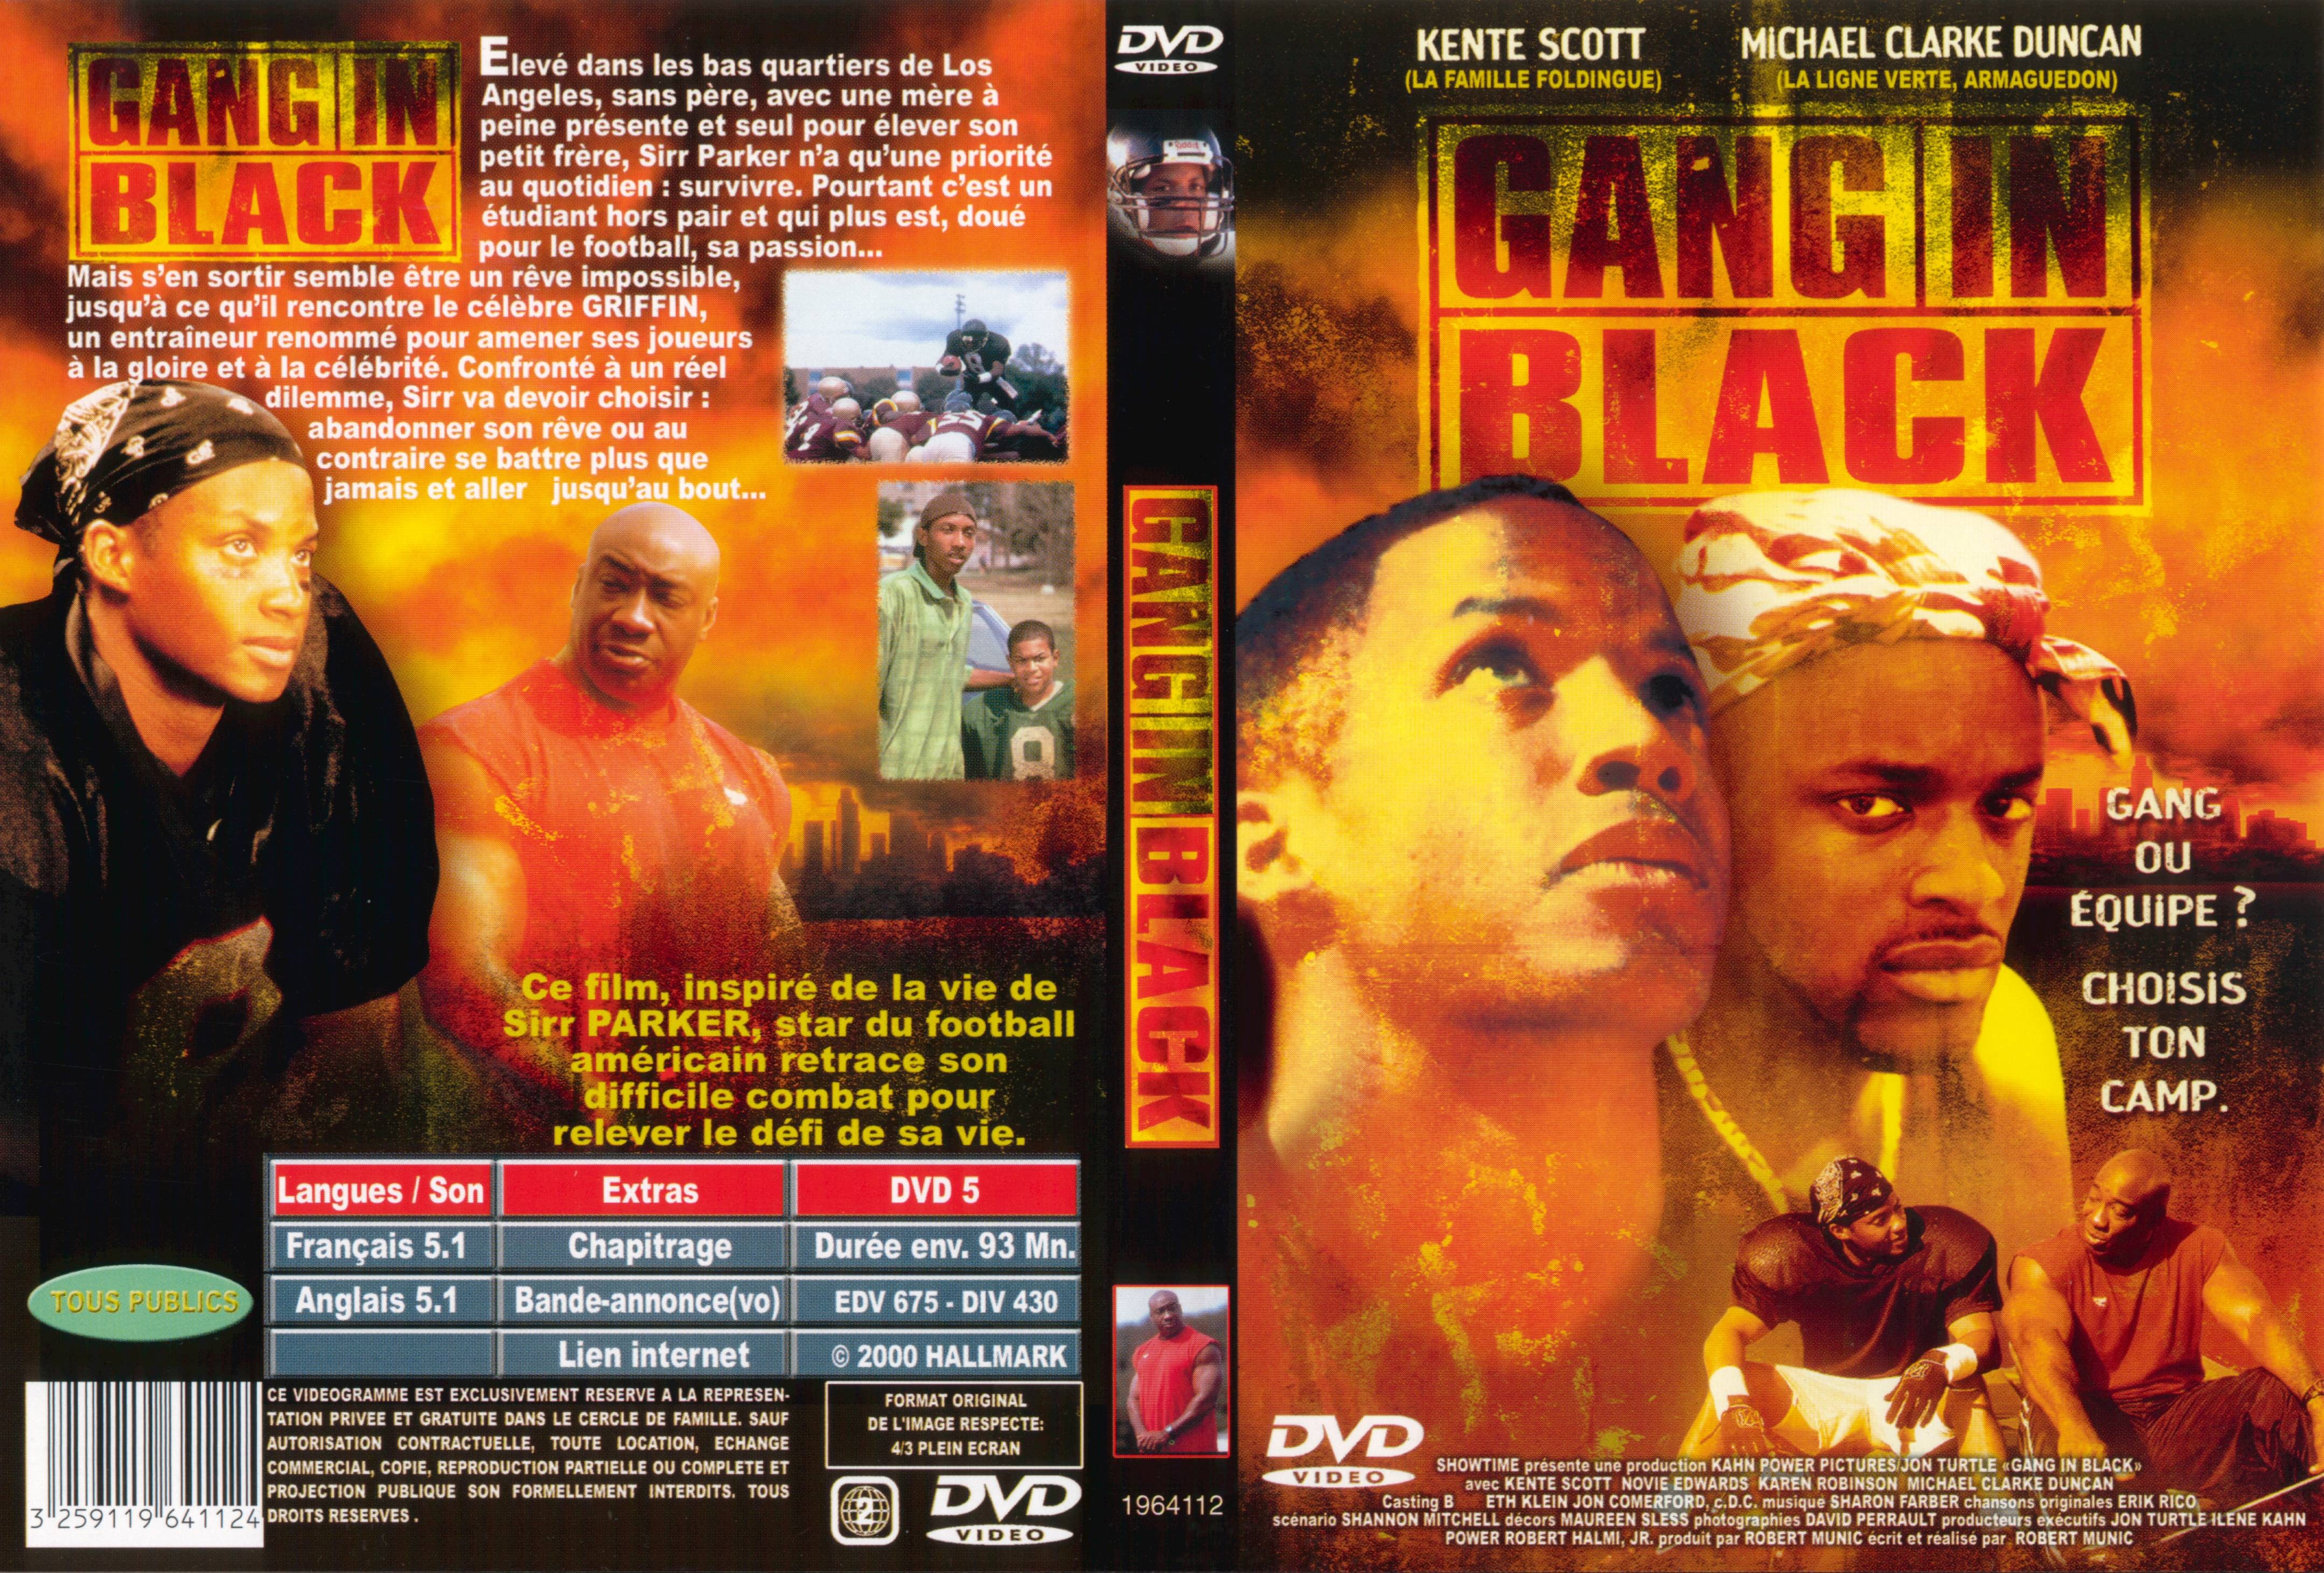 Jaquette DVD Gang in black